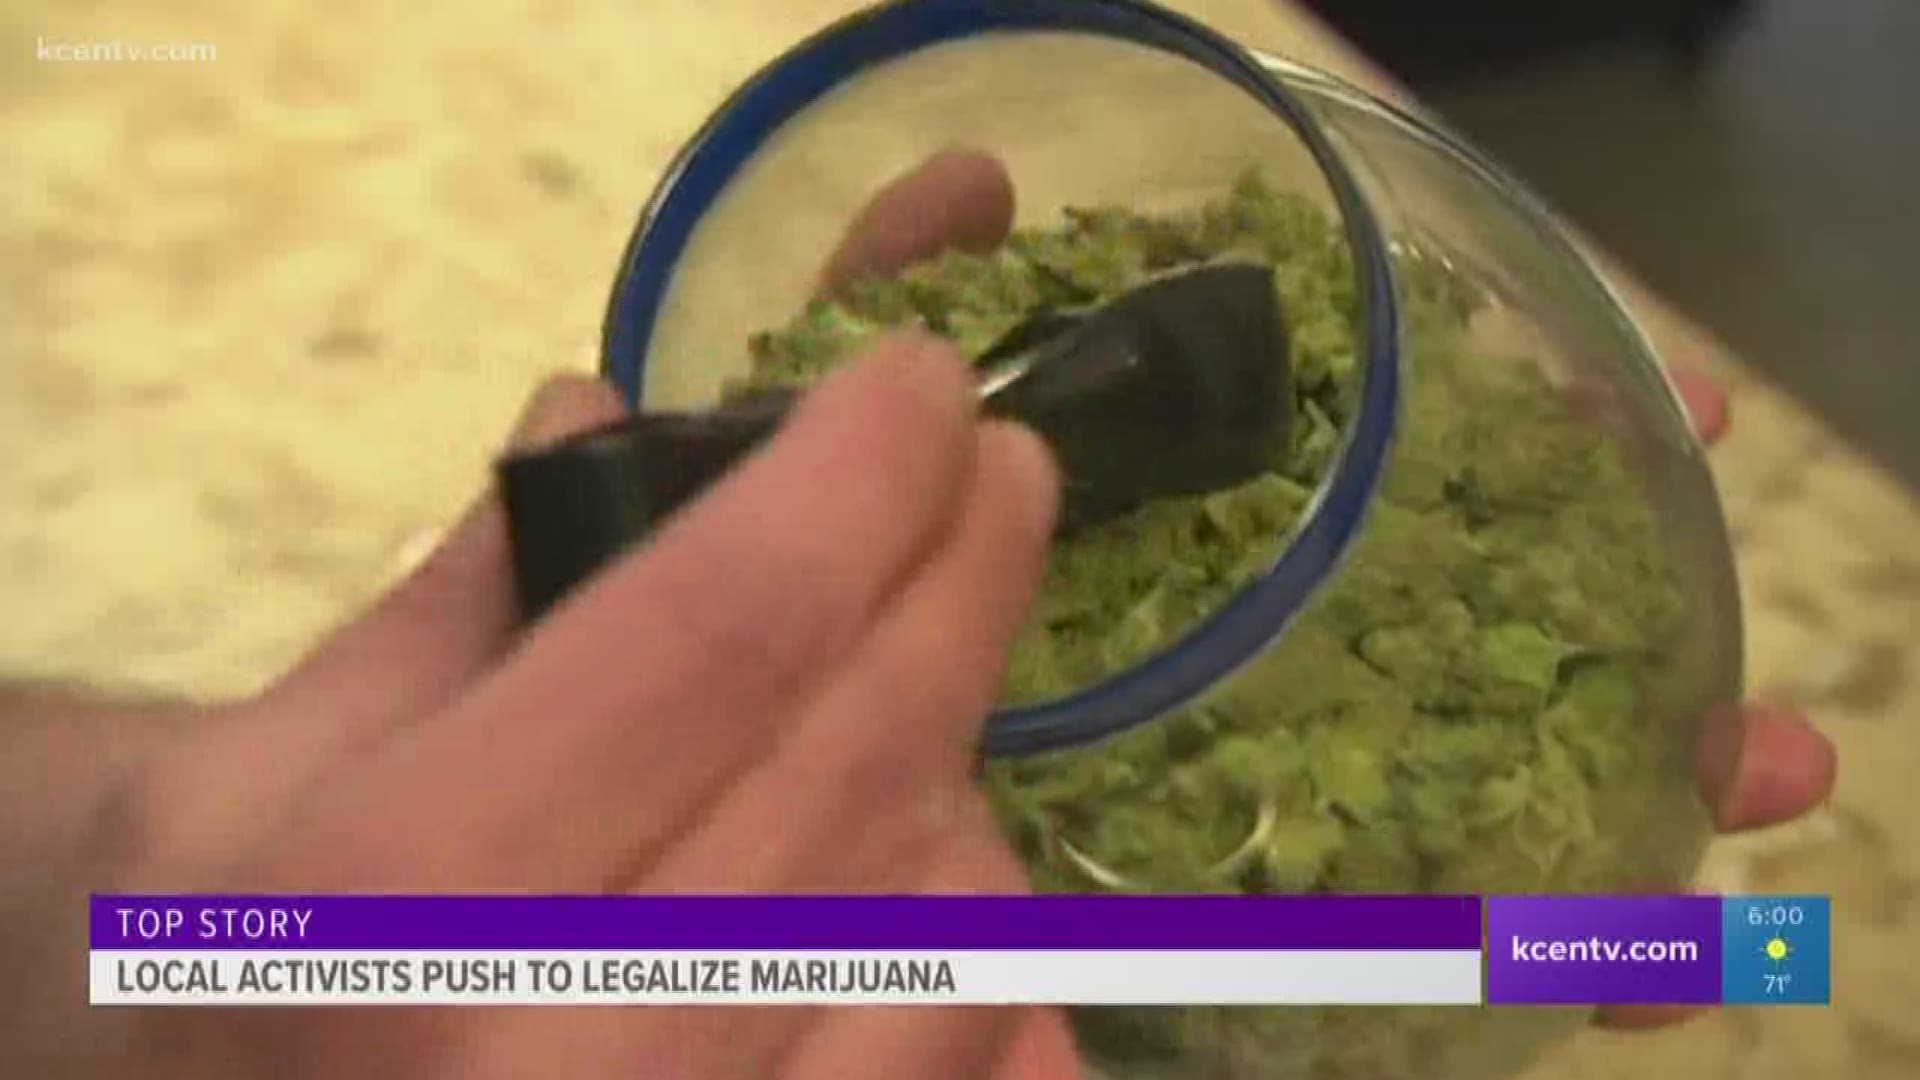 Legalizing marijuana